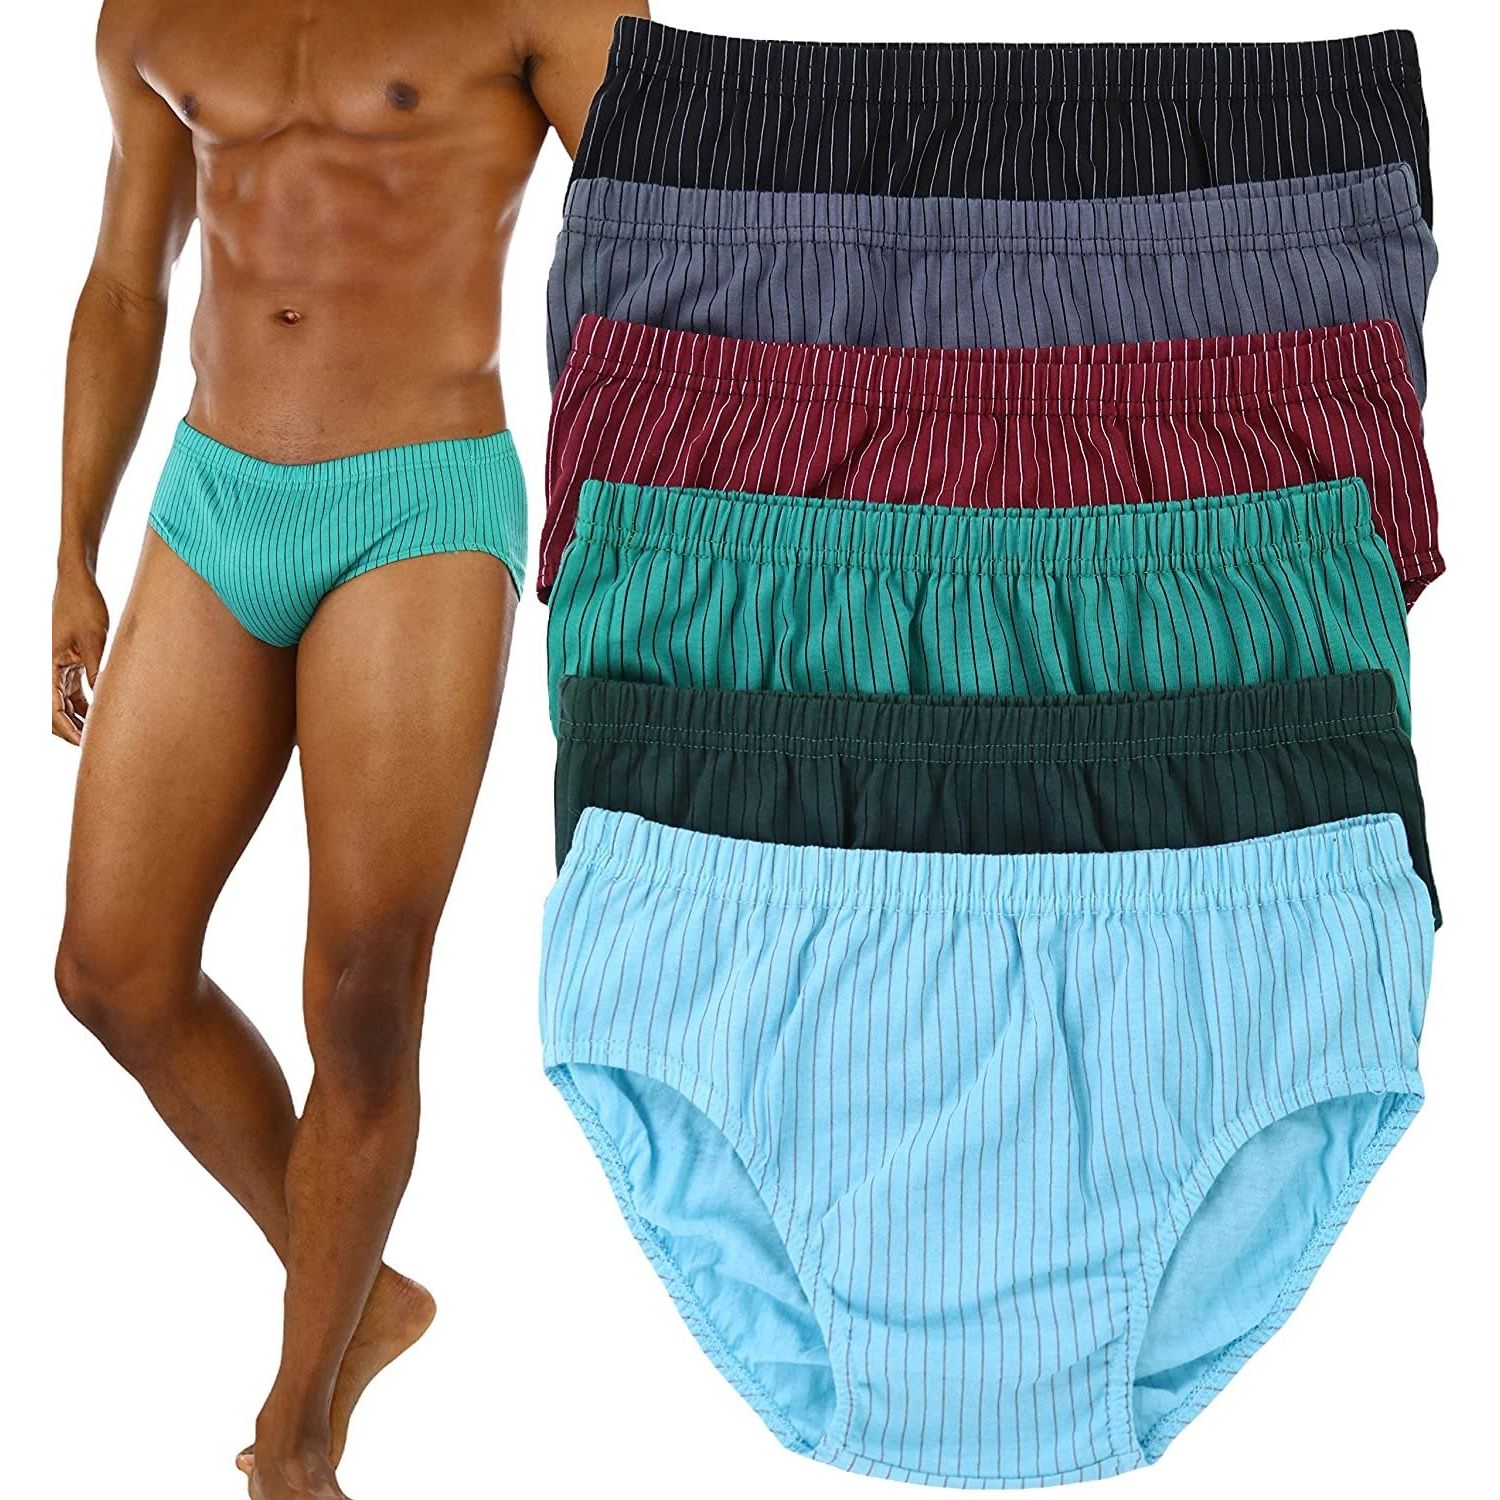 Mens Sexy Bikini Briefs: Comfortable And Stylish Underwear For Men From  Mengqiqi03, $8.57